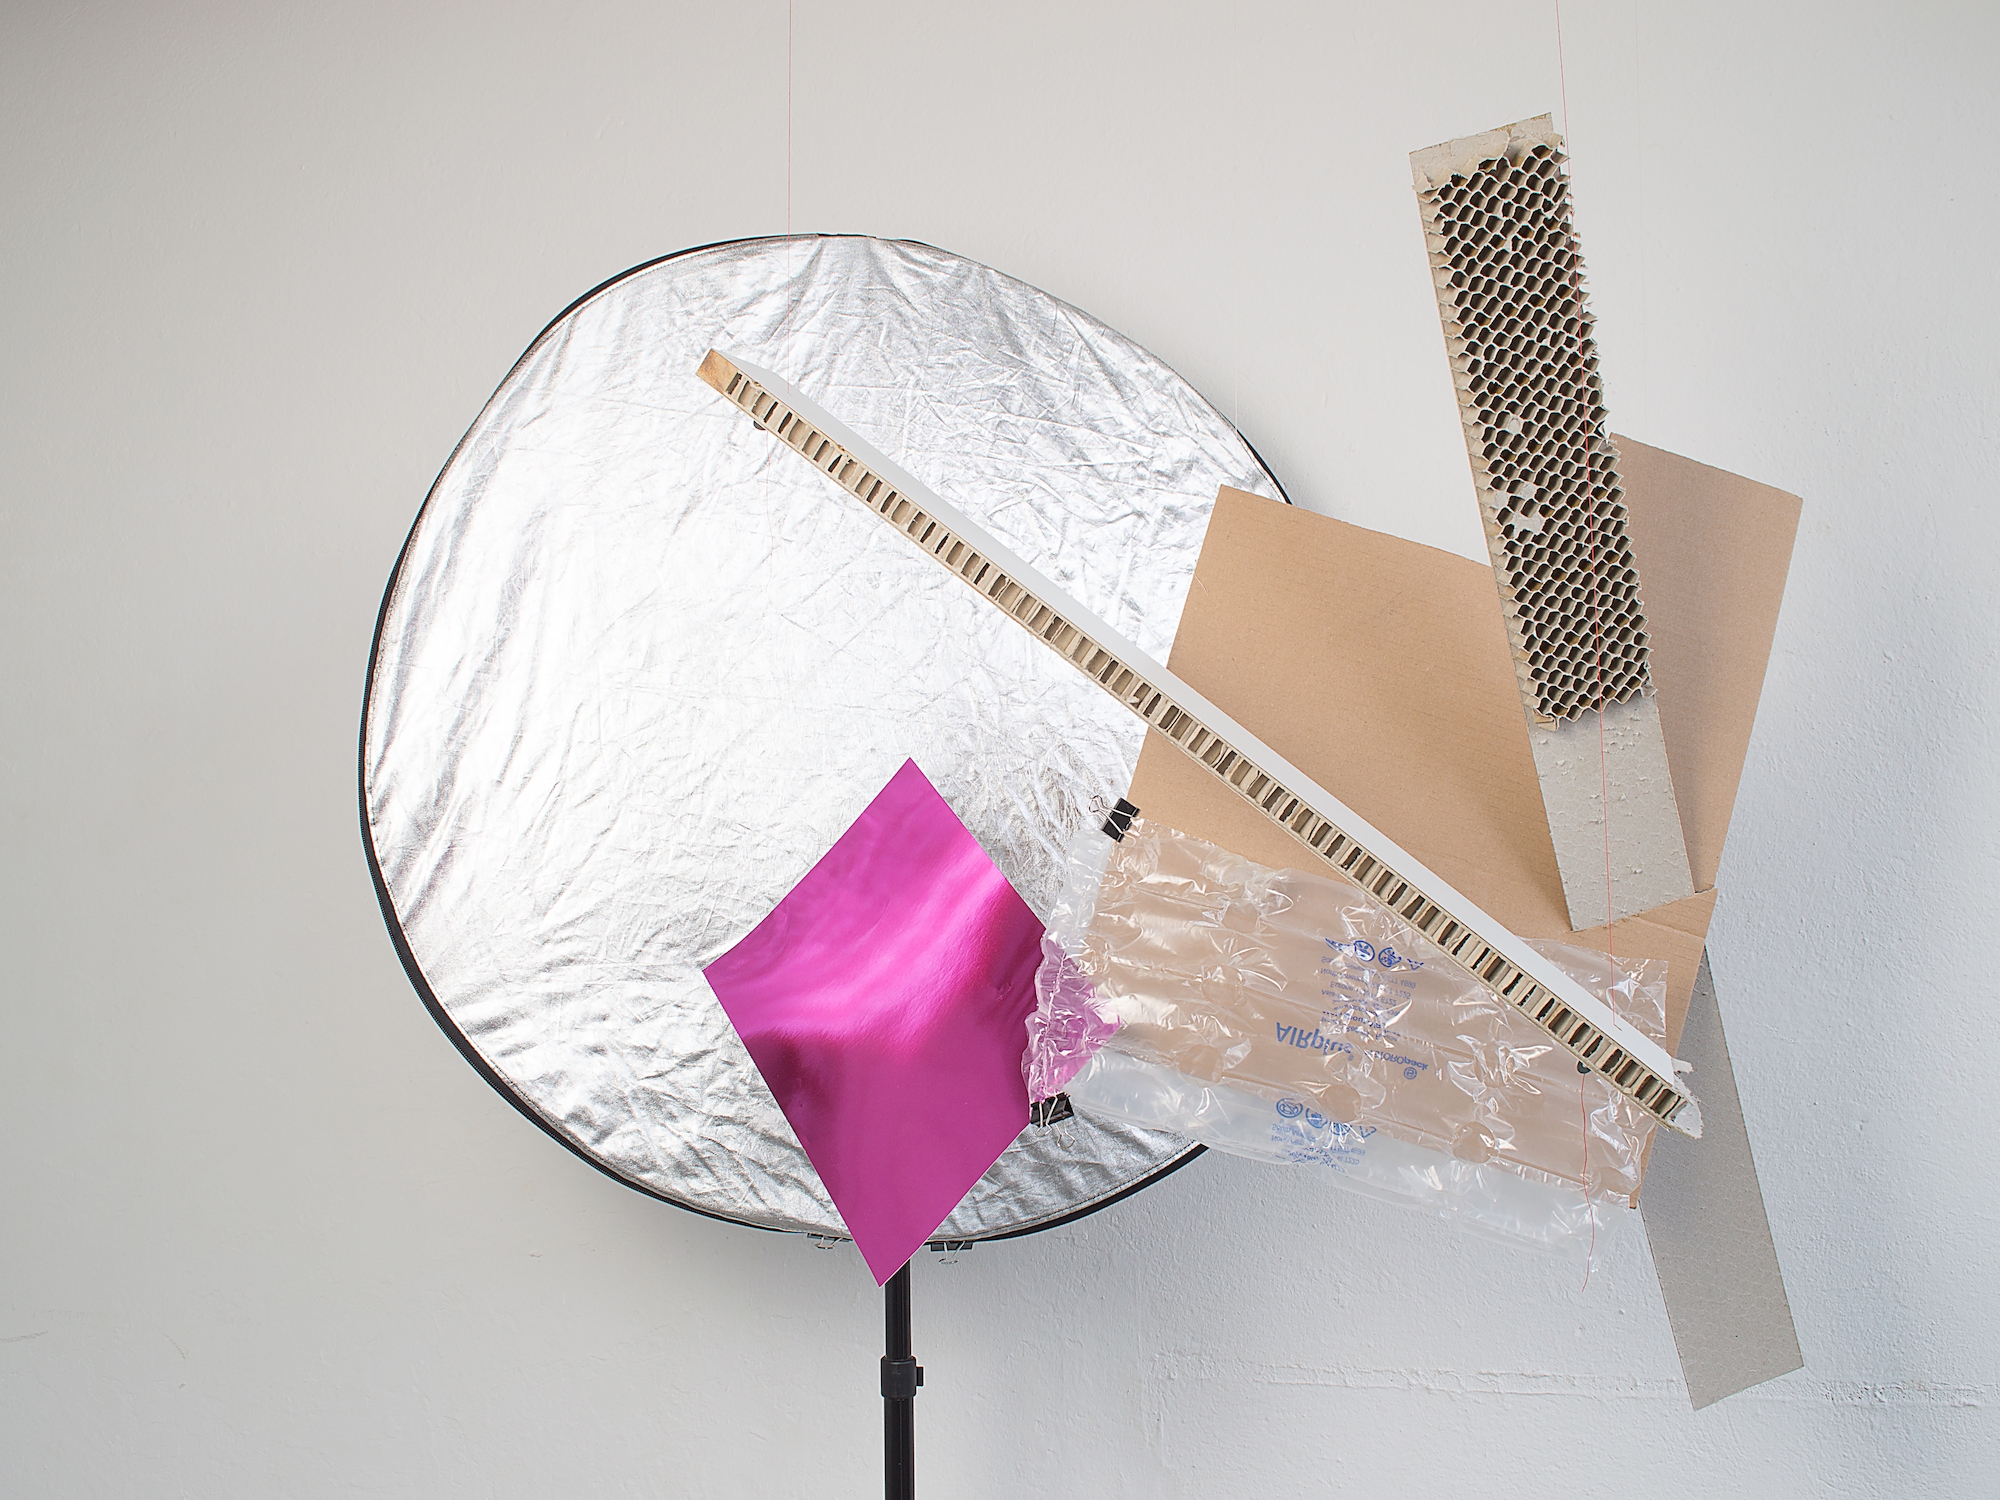 Untitled (round silver,pink carton) 2015